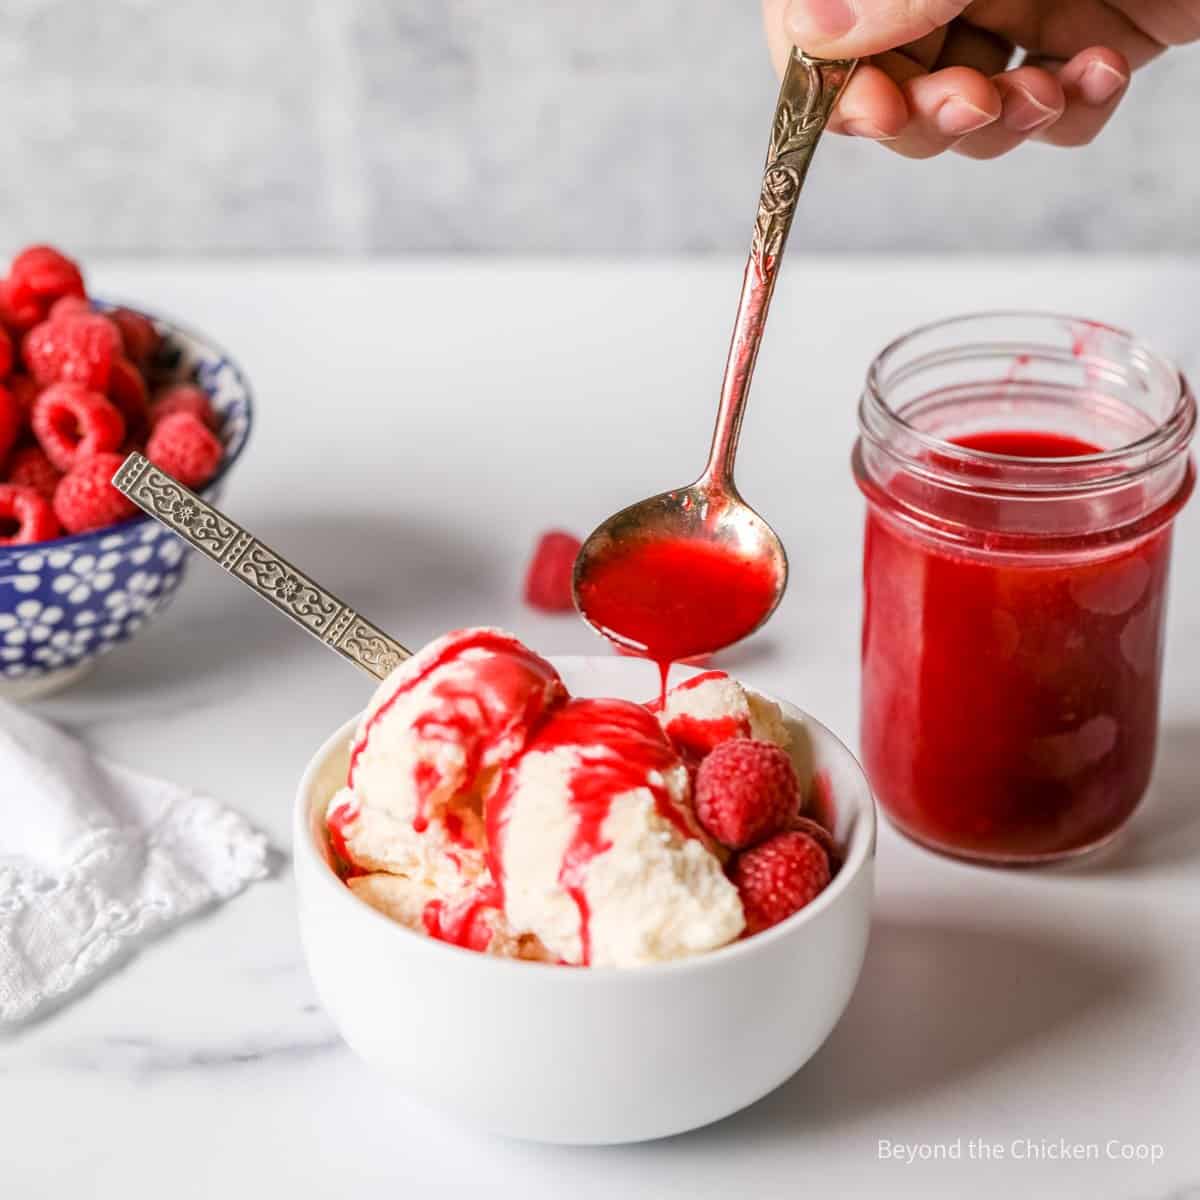 Raspberry sauce being ladled over ice cream.